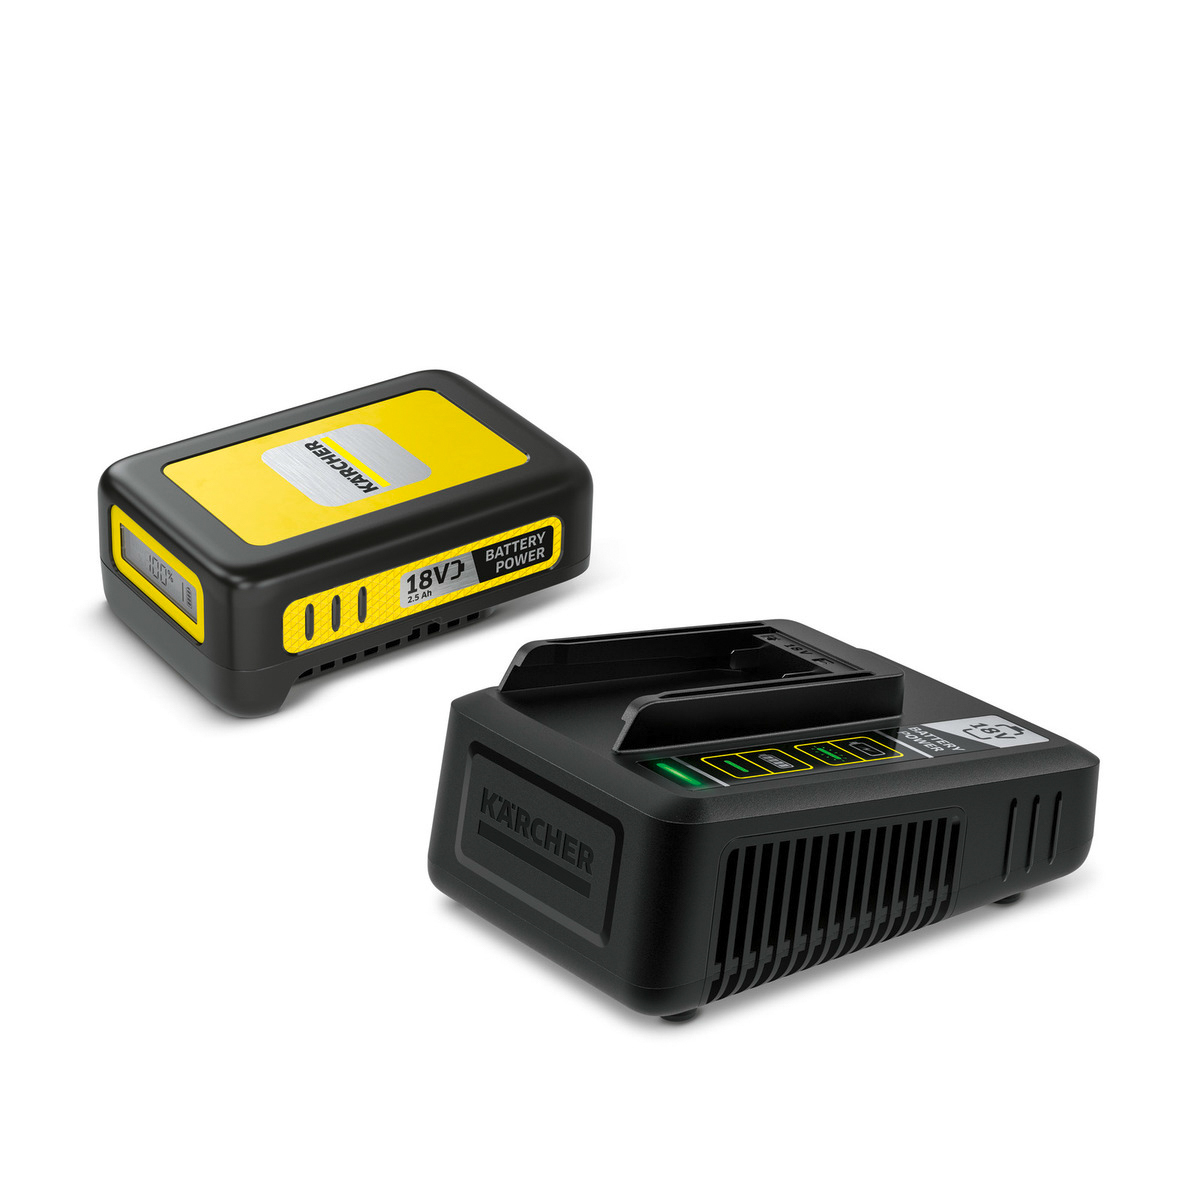 Démarreur kit Battery Power 18/25 *EU KÄRCHER - 2.445-062.0